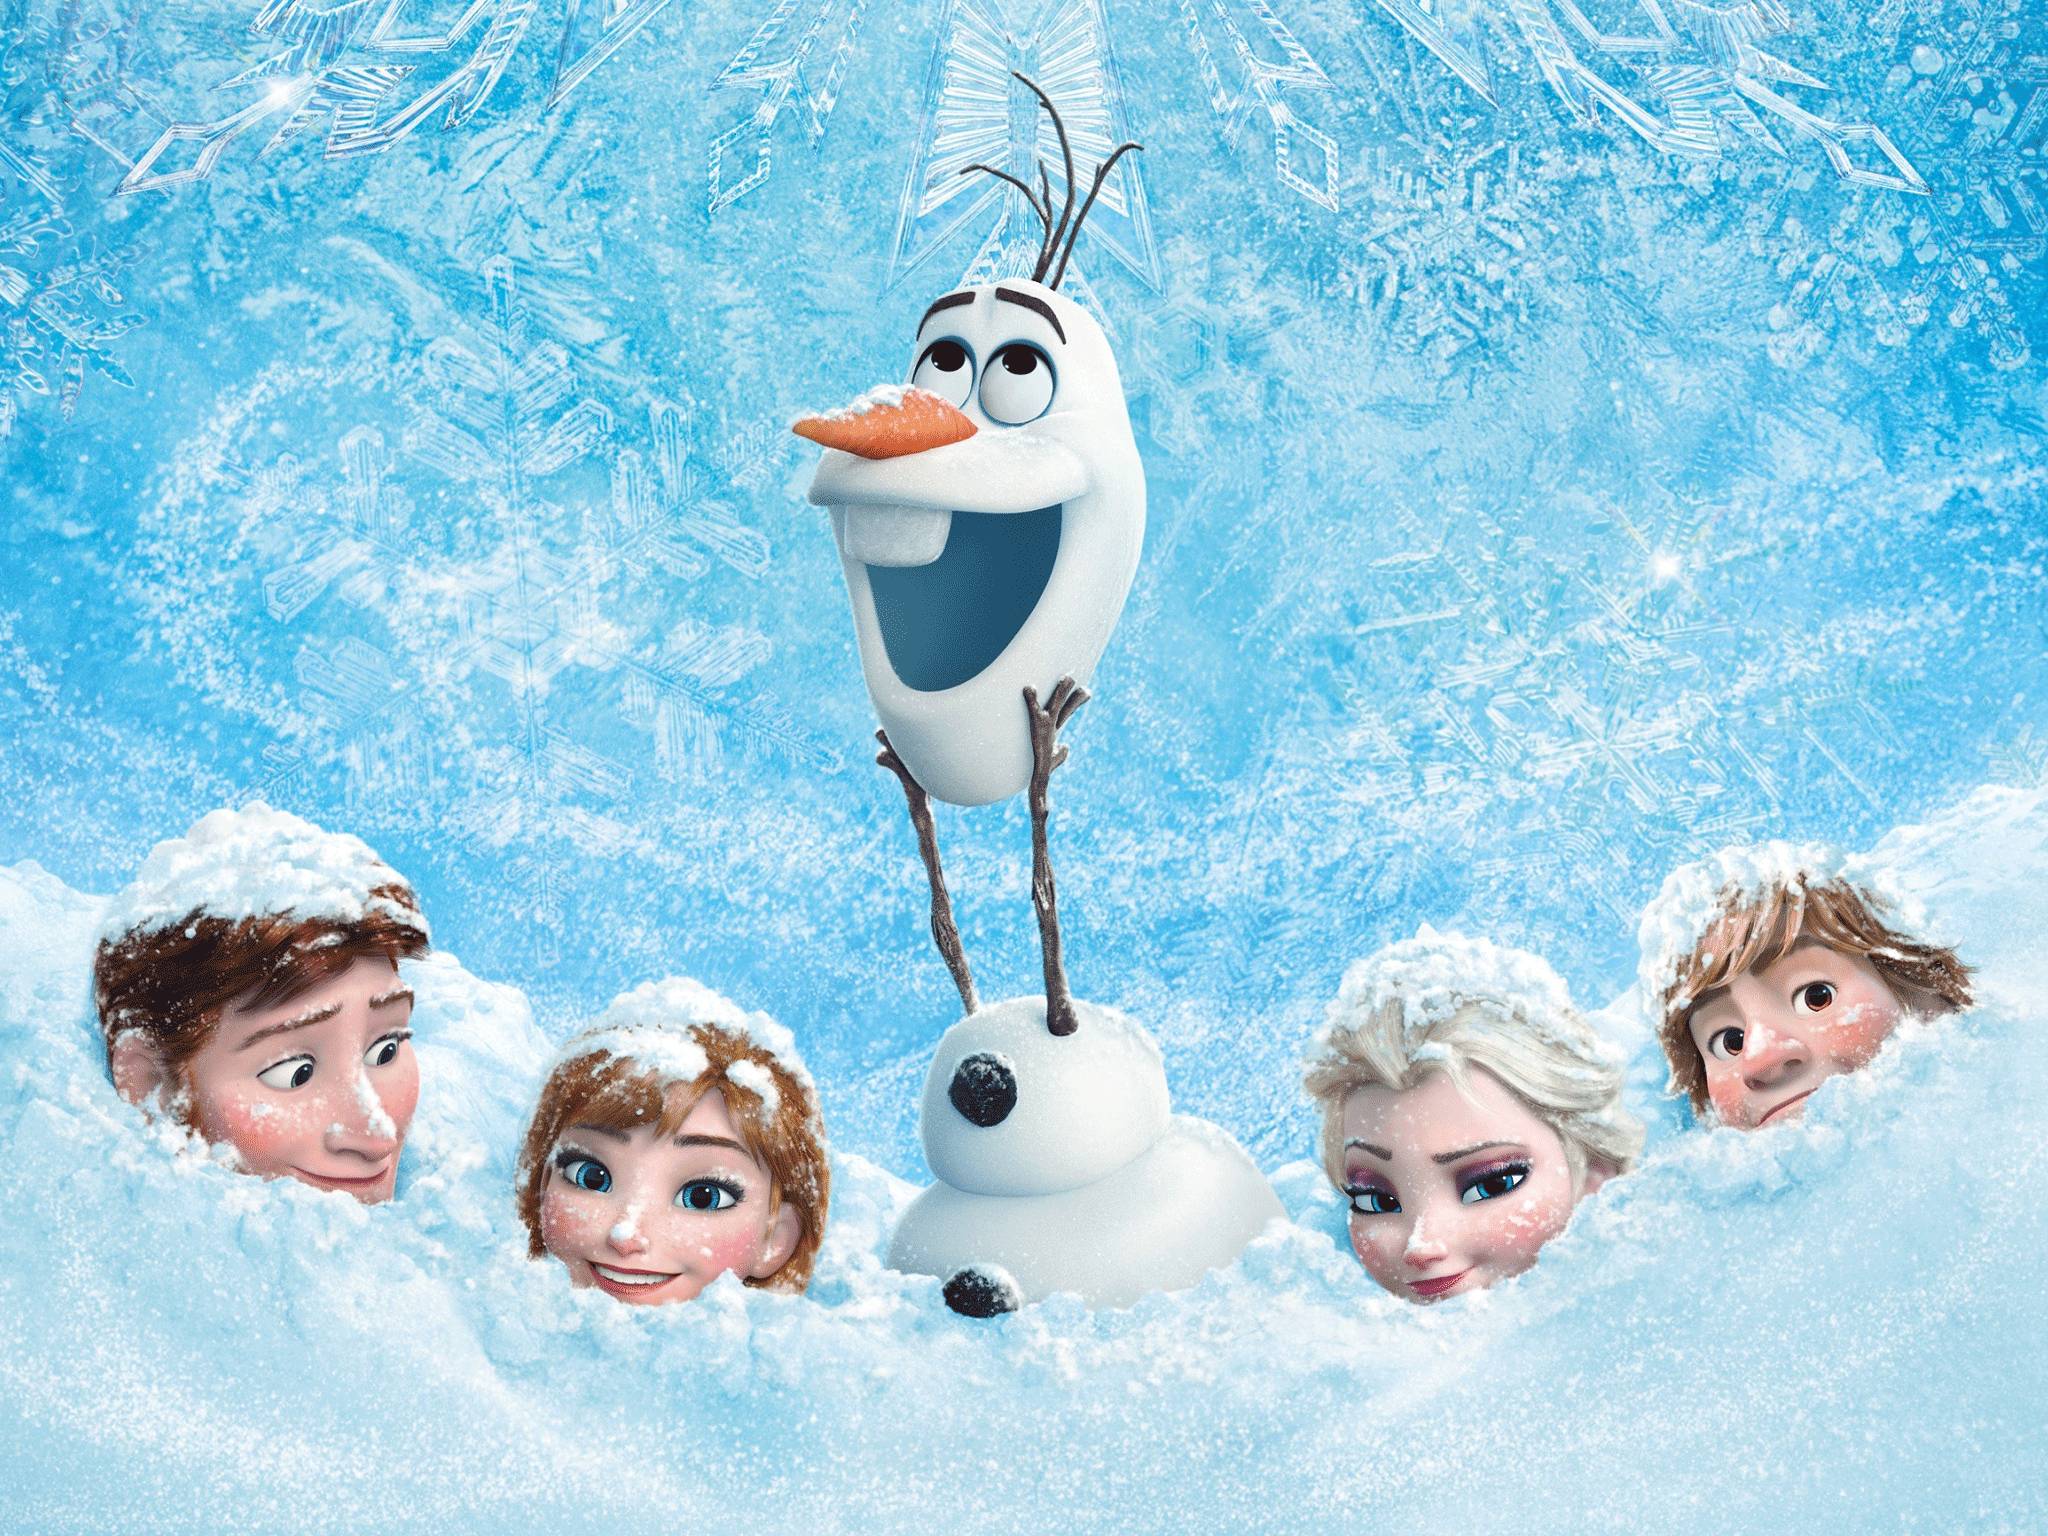 Disney's Frozen has been named the best-selling album of 2014 so far